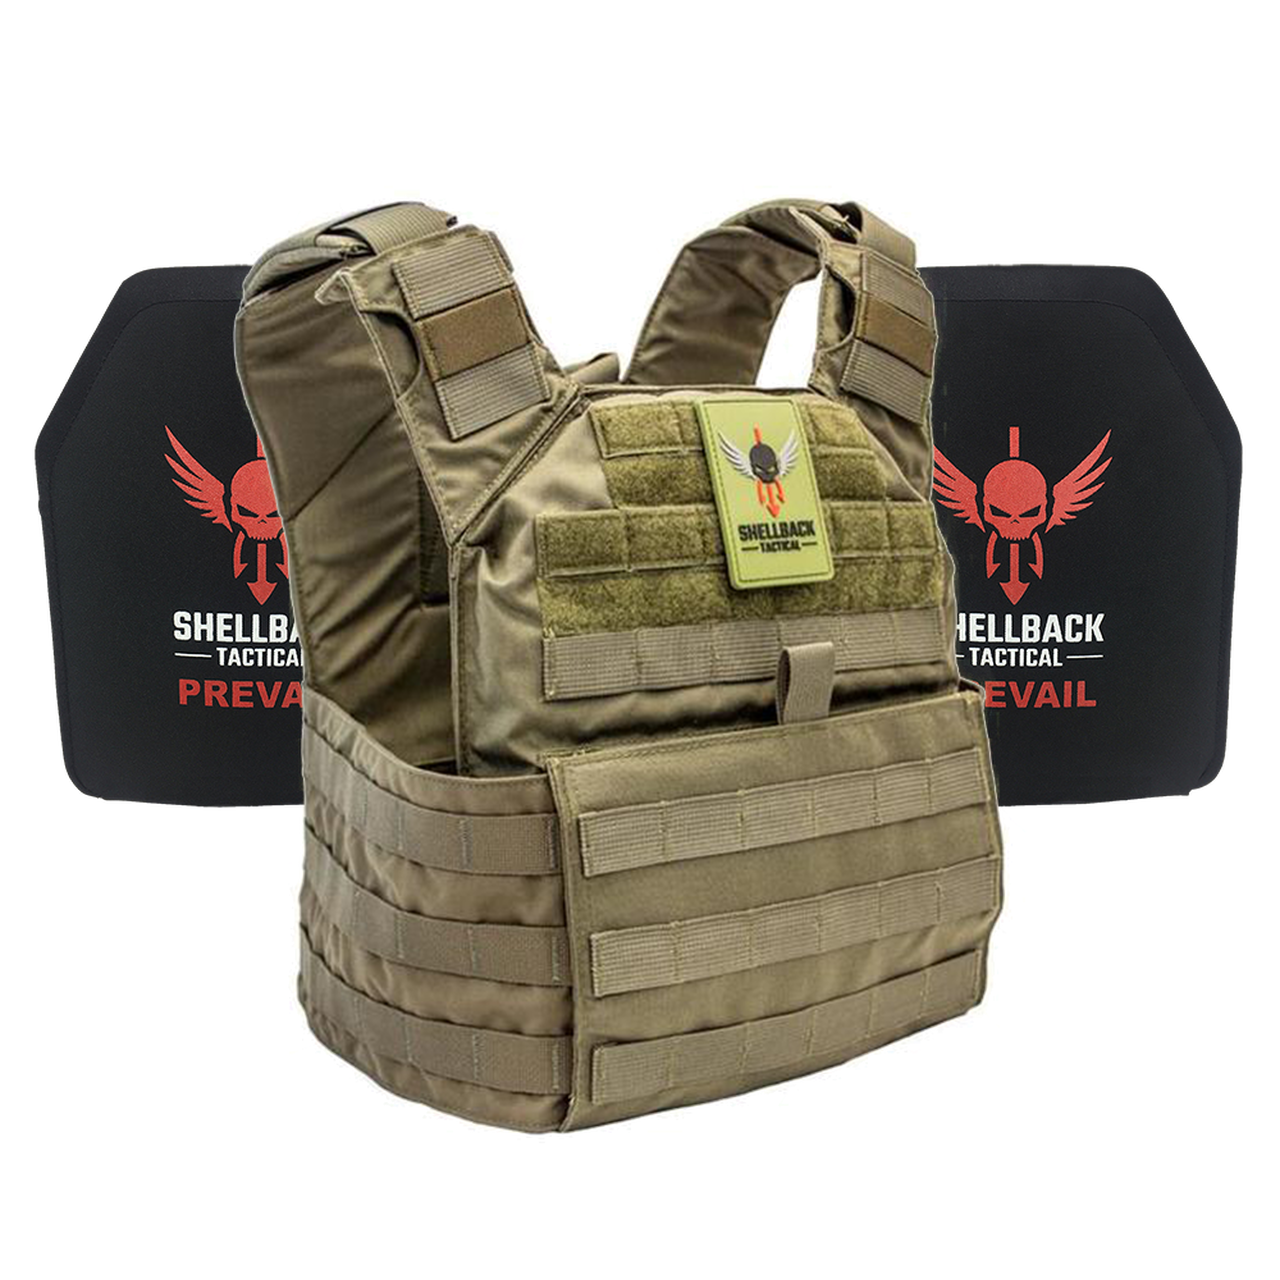 Shellback Tactical Banshee Active Shooter Kit with Level III Single Curve 10 x 12 Hard Armor